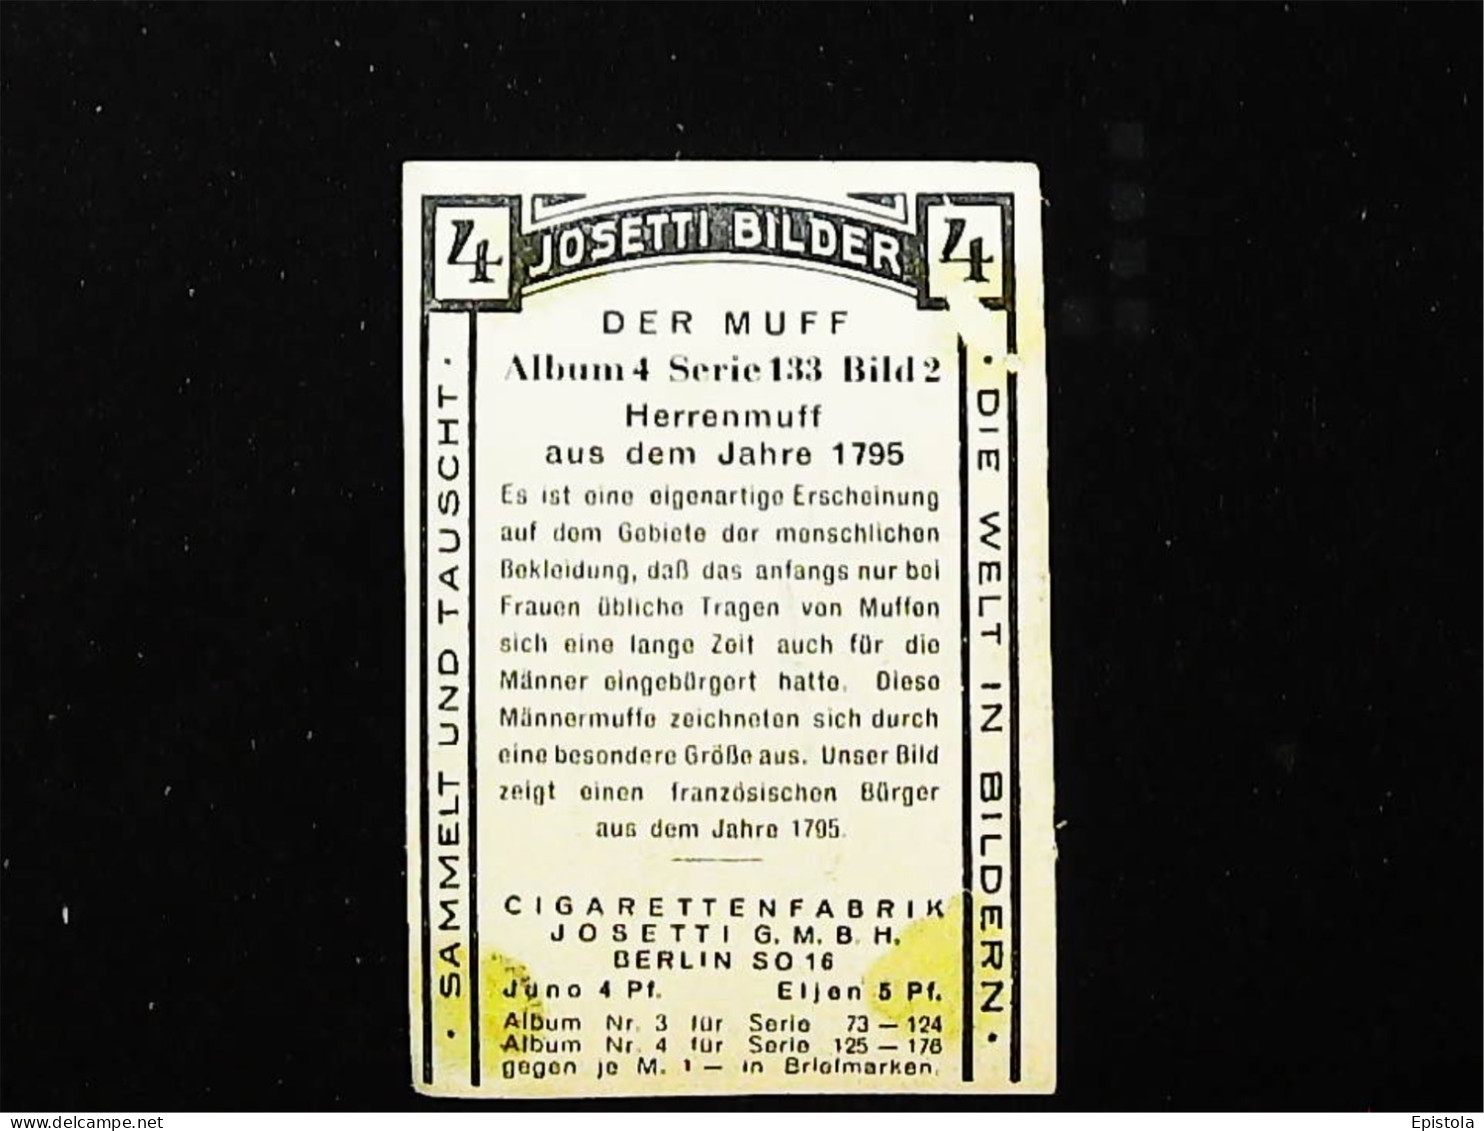 ► MODE Du Manchon Allemagne En 1795 - Chromo-Image Cigarette Josetti Bilder Berlin Album 4 1920's - Zigarettenmarken